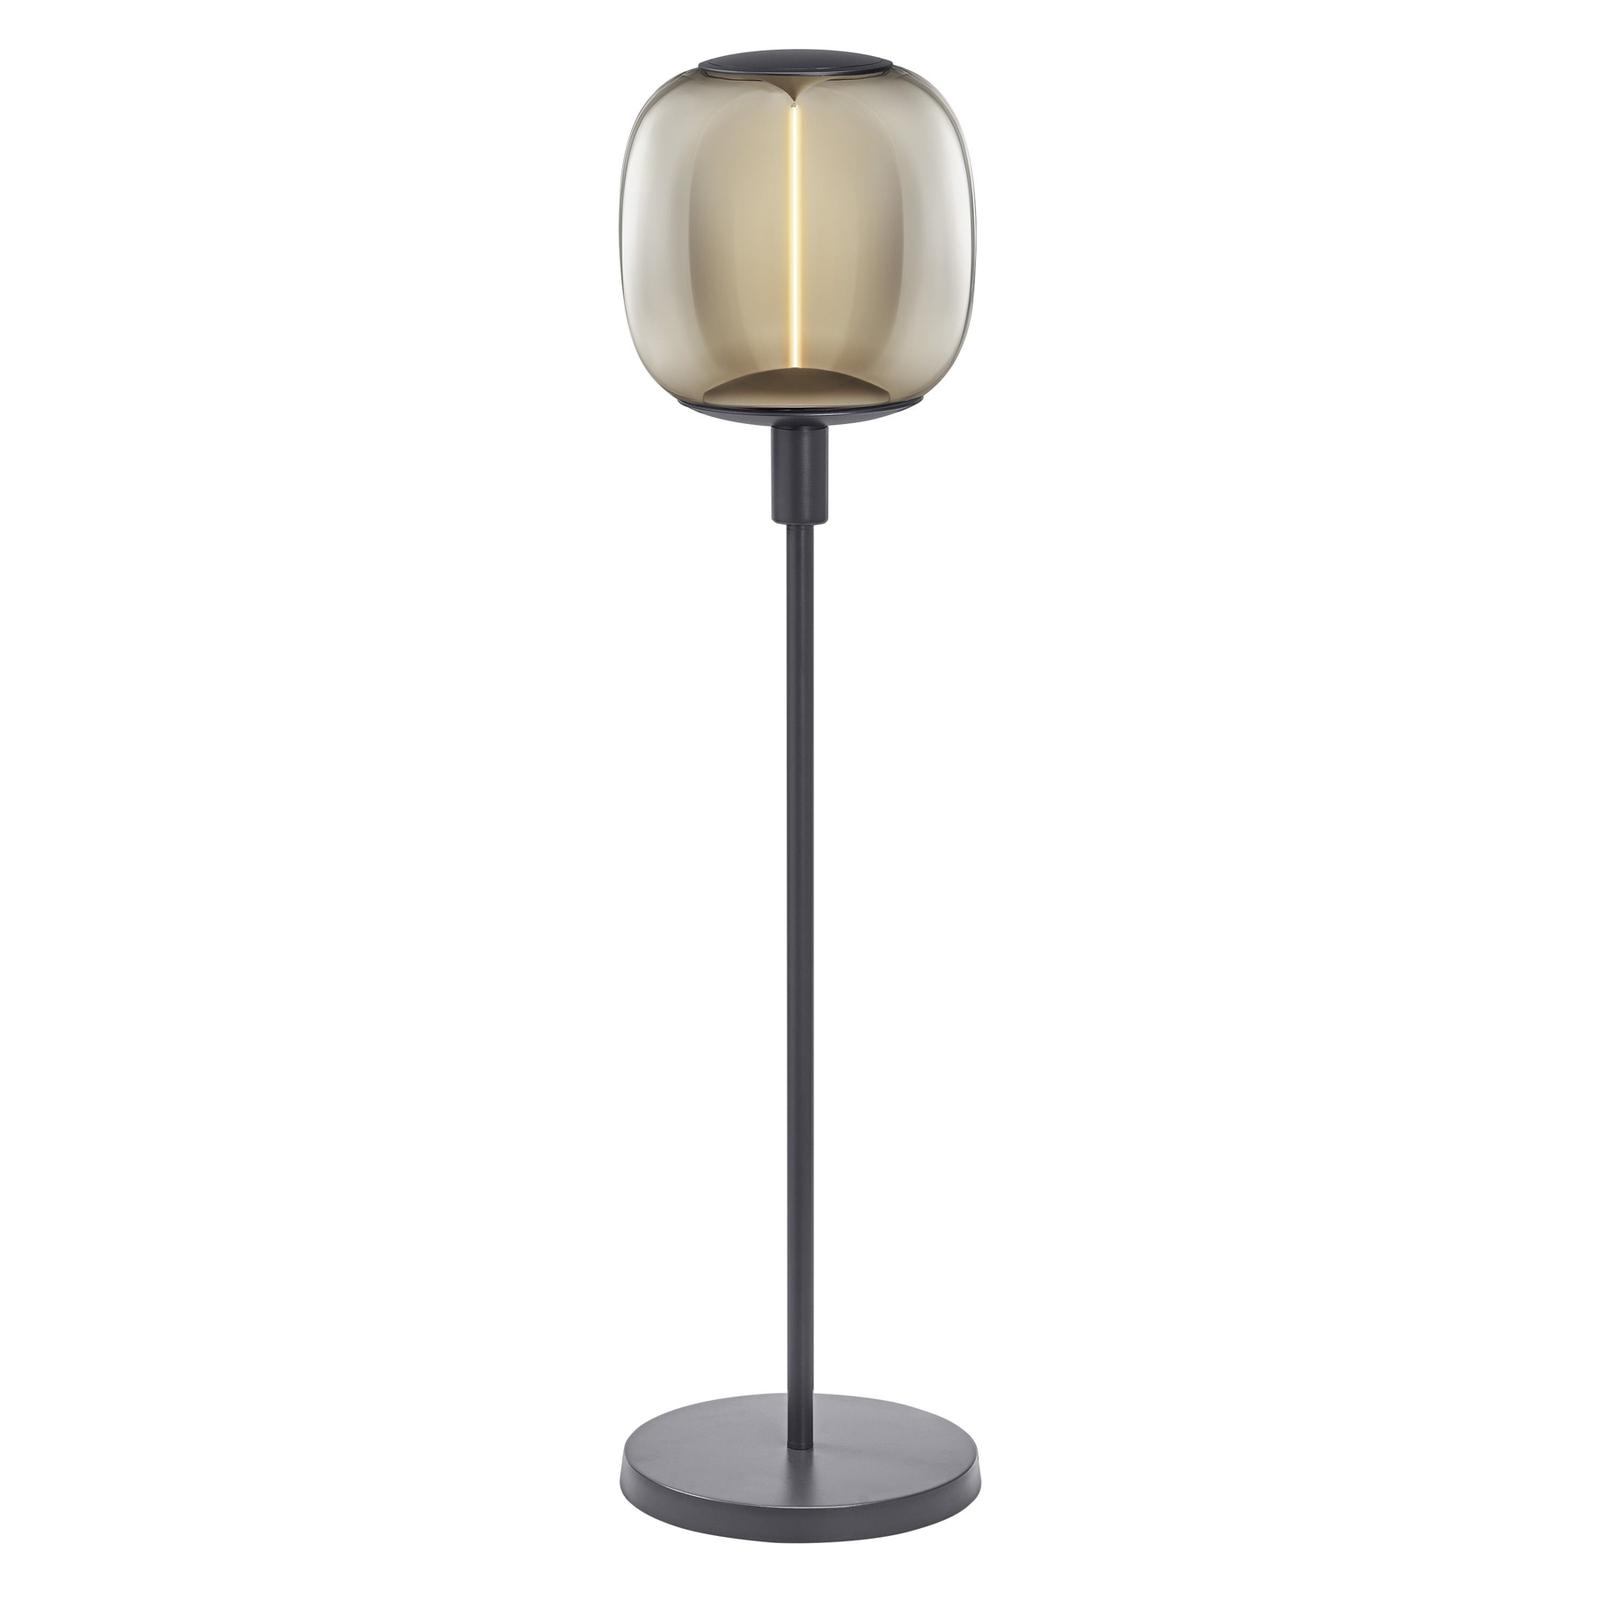 LEDVANCE talna svetilka Decor Stick E27, višina 78 cm, temno siva